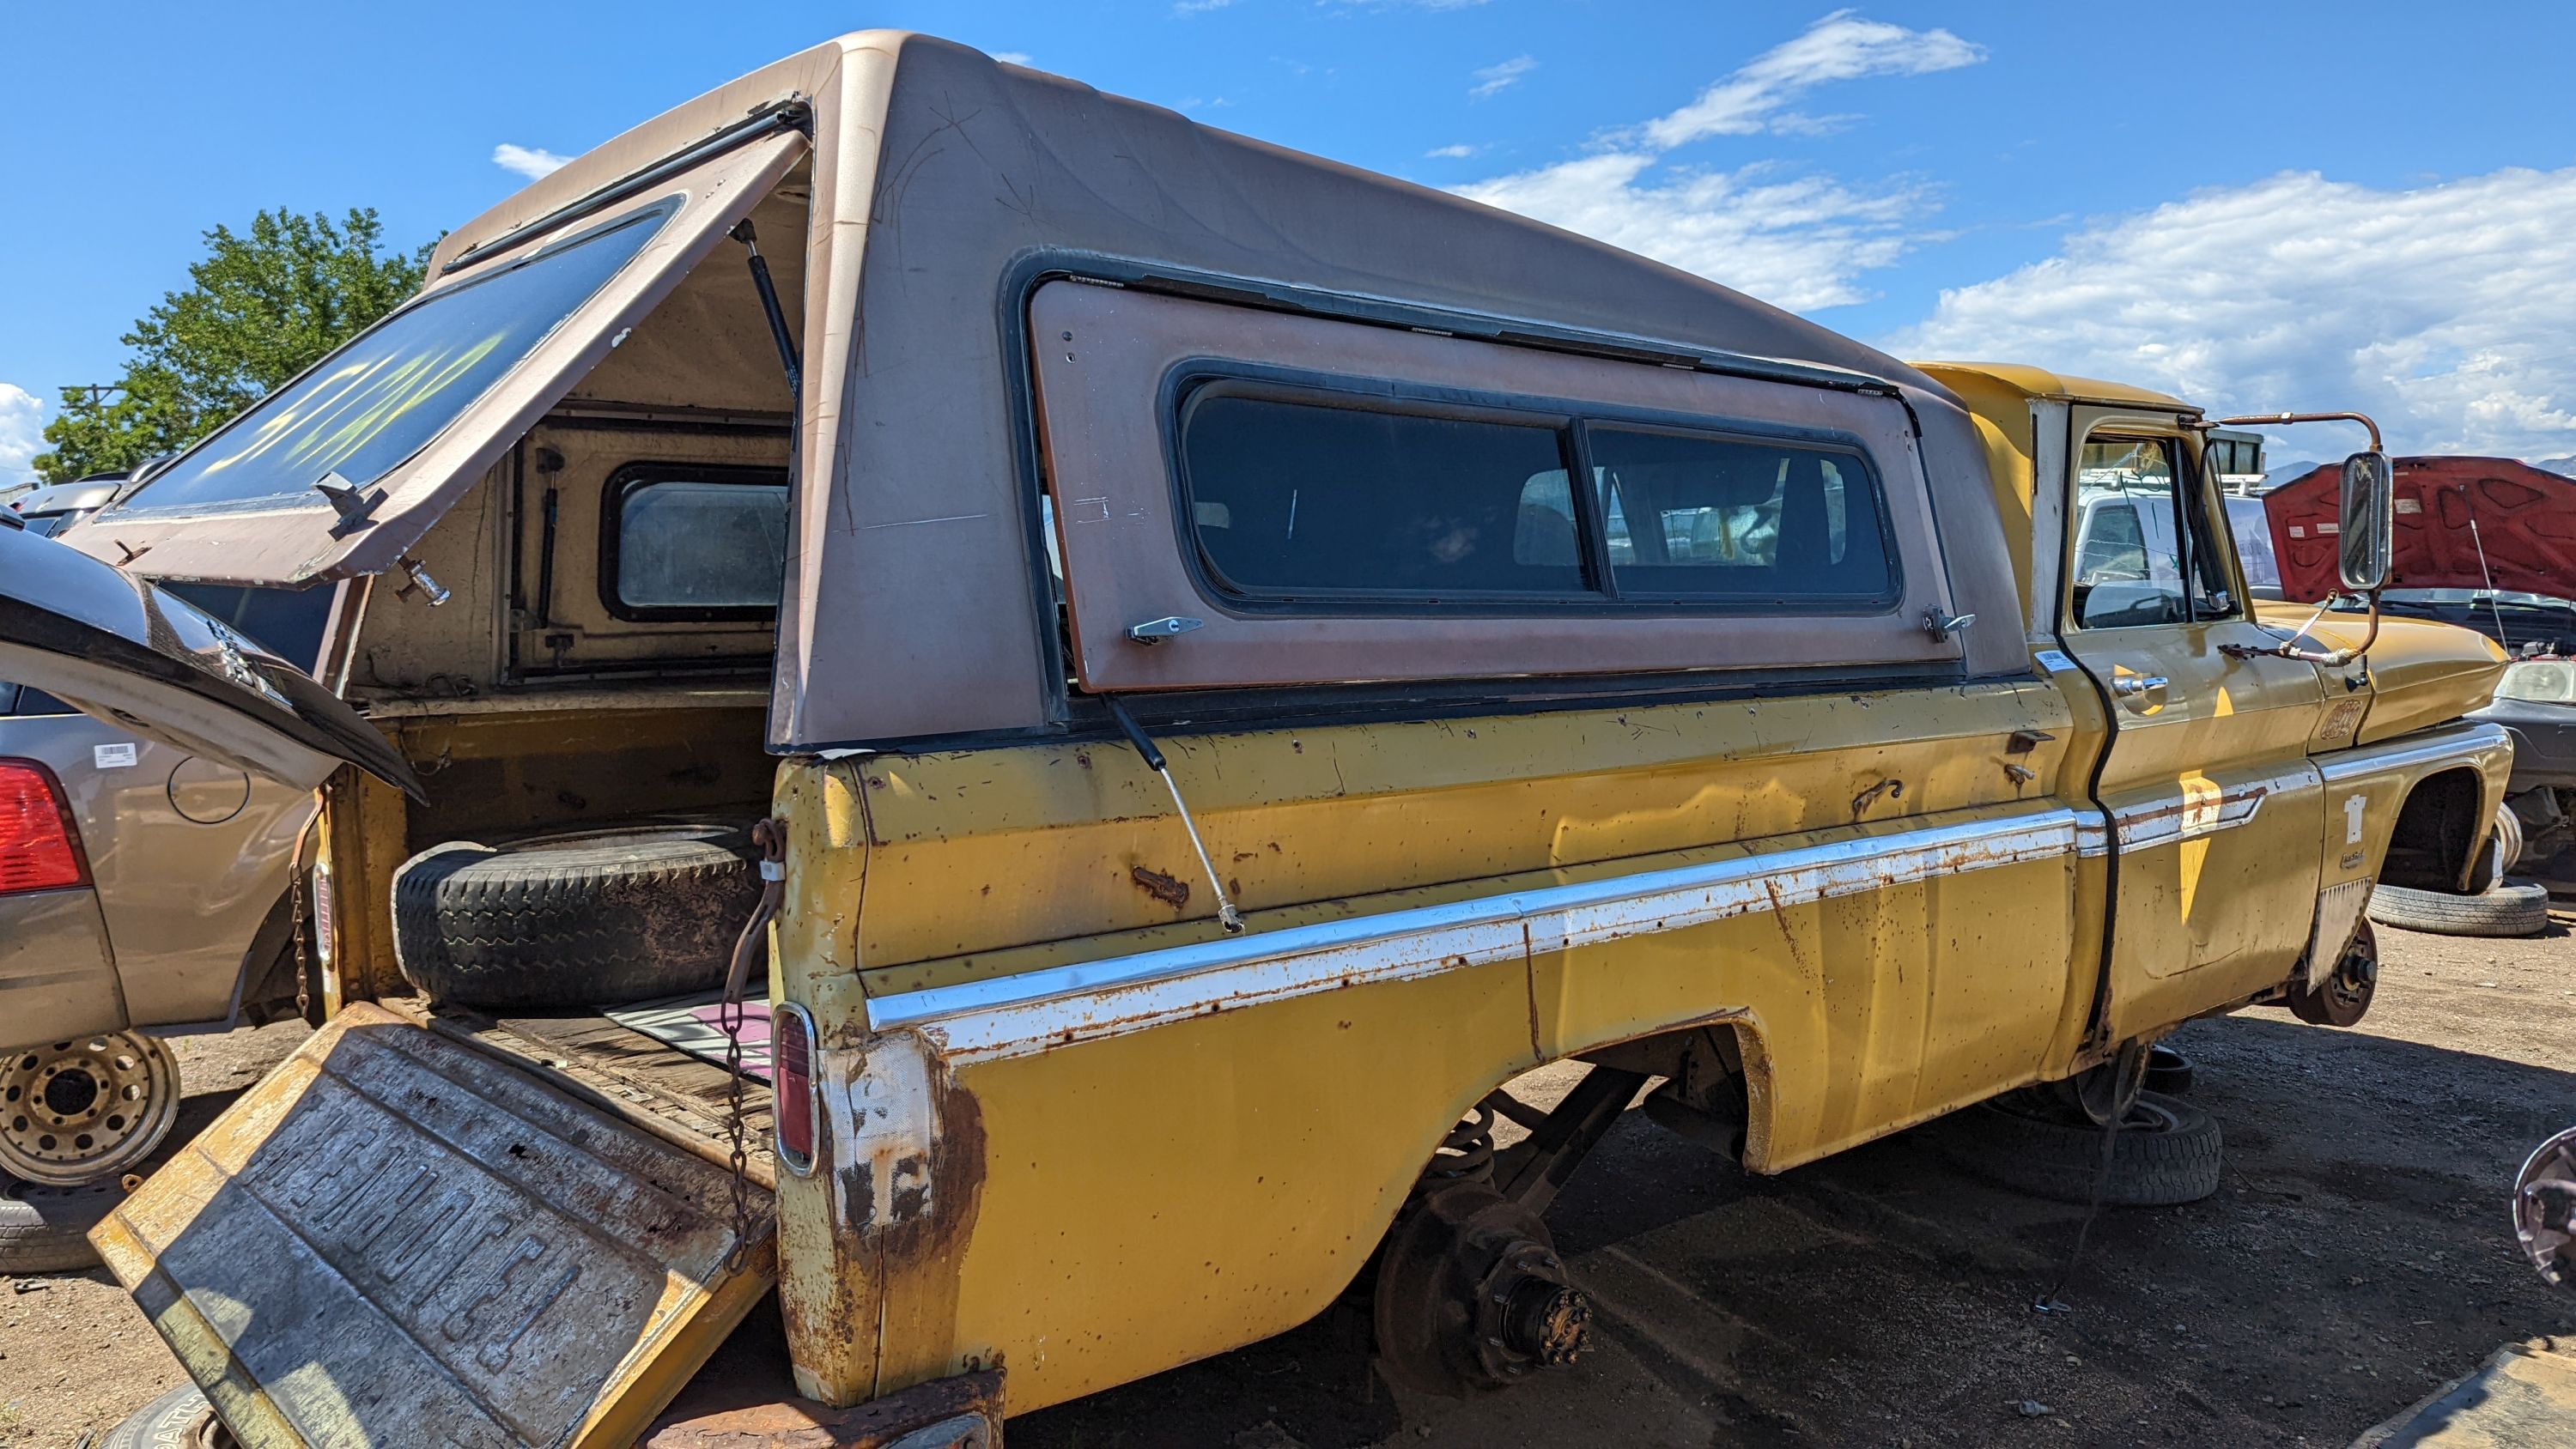 61 - 1964 Chevrolet C20 Pickup in Colorado junkyard - Photo by Murilee Martin